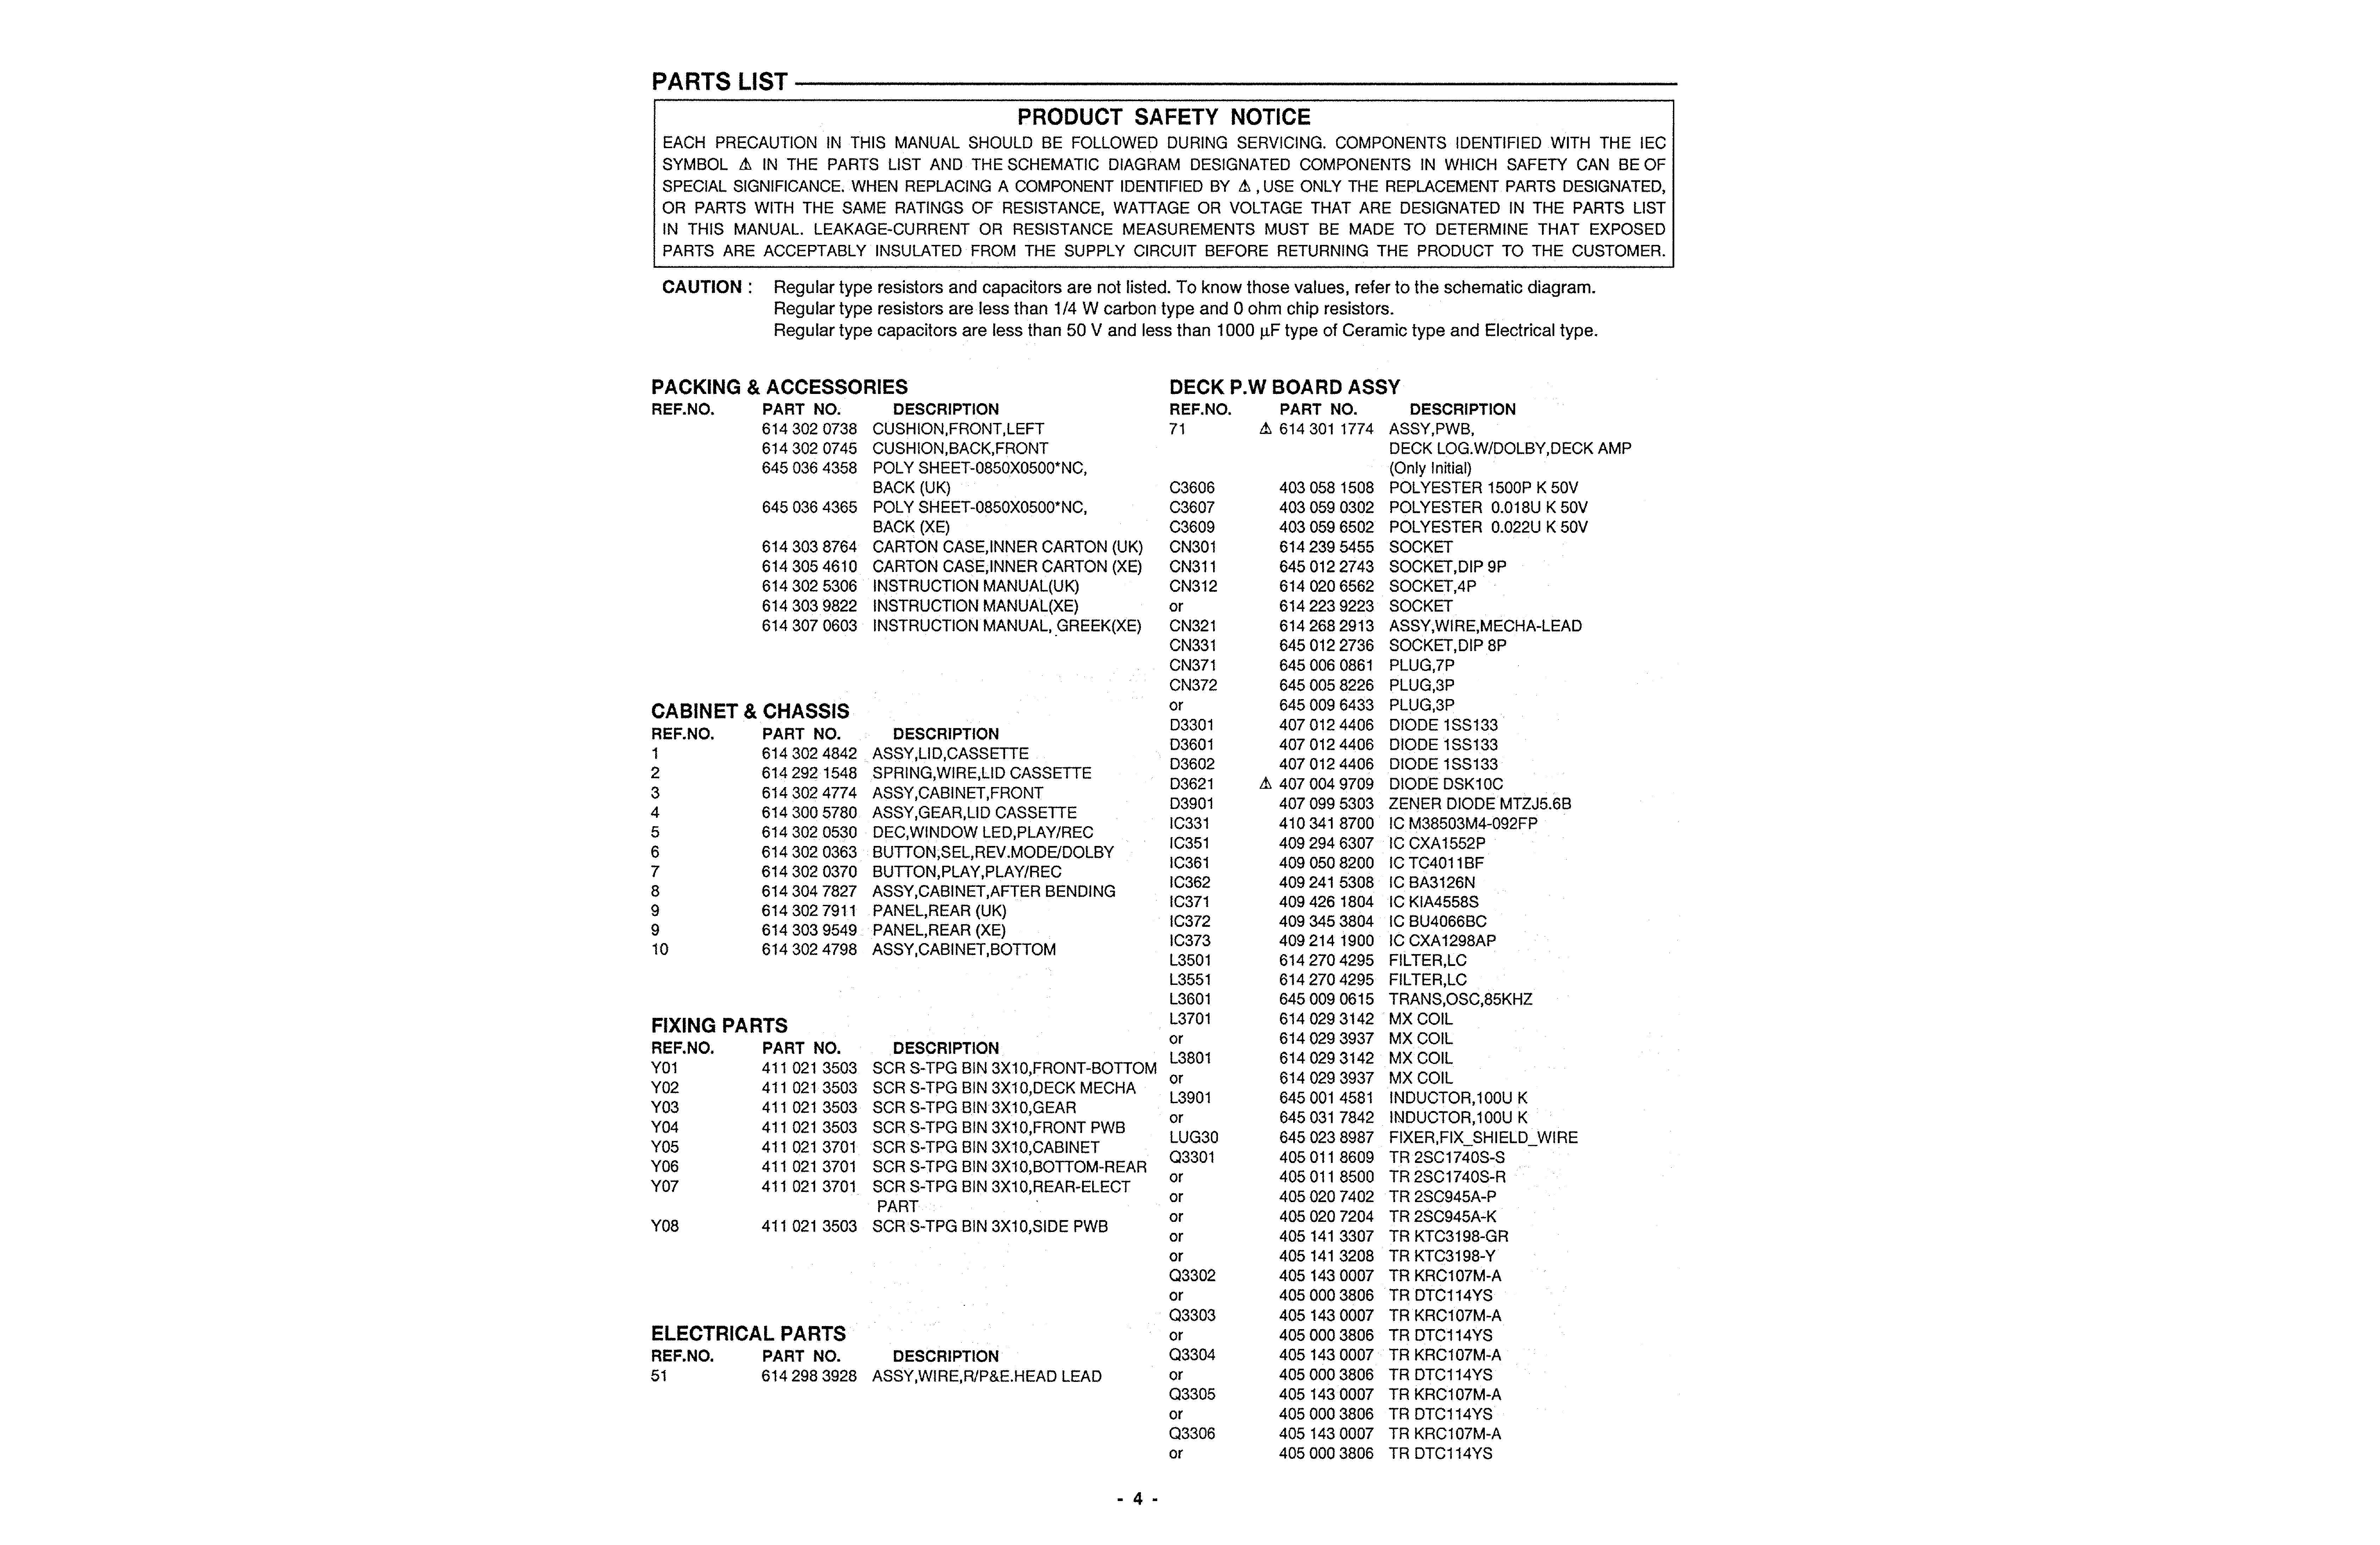 SANYO RD007 - Service Manual Immediate Download